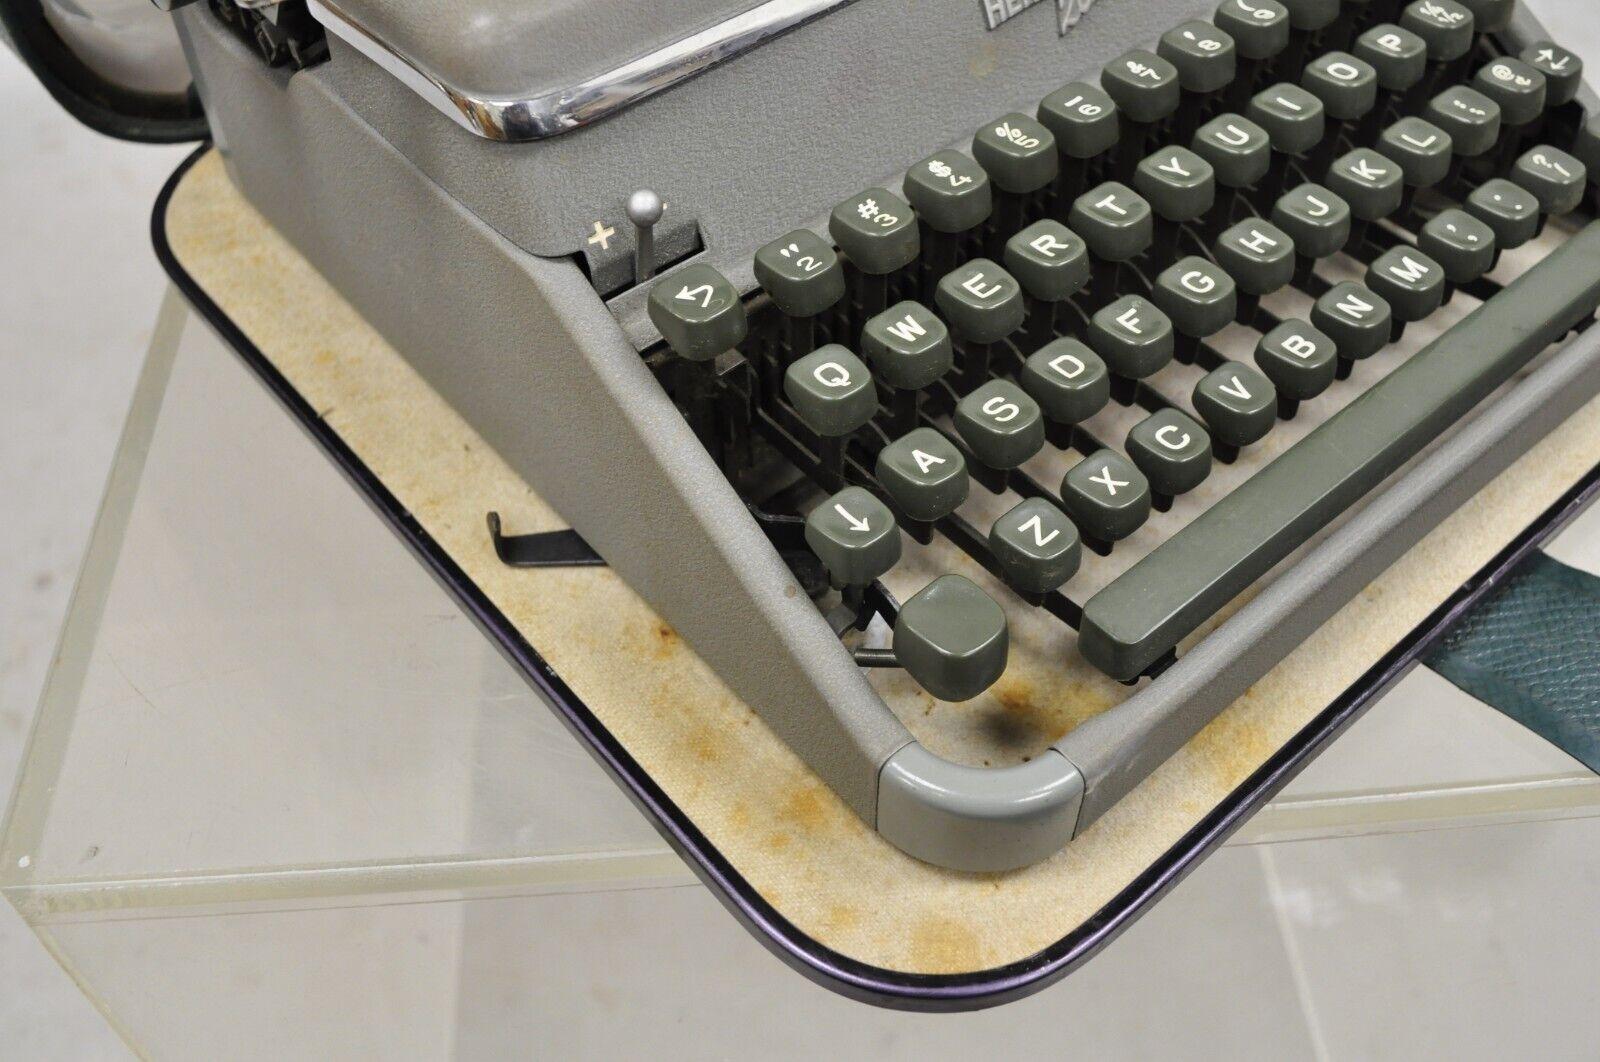 Vintage Hermes 2000 by Paillard Manual Typewriter with Green Carrying Case 1